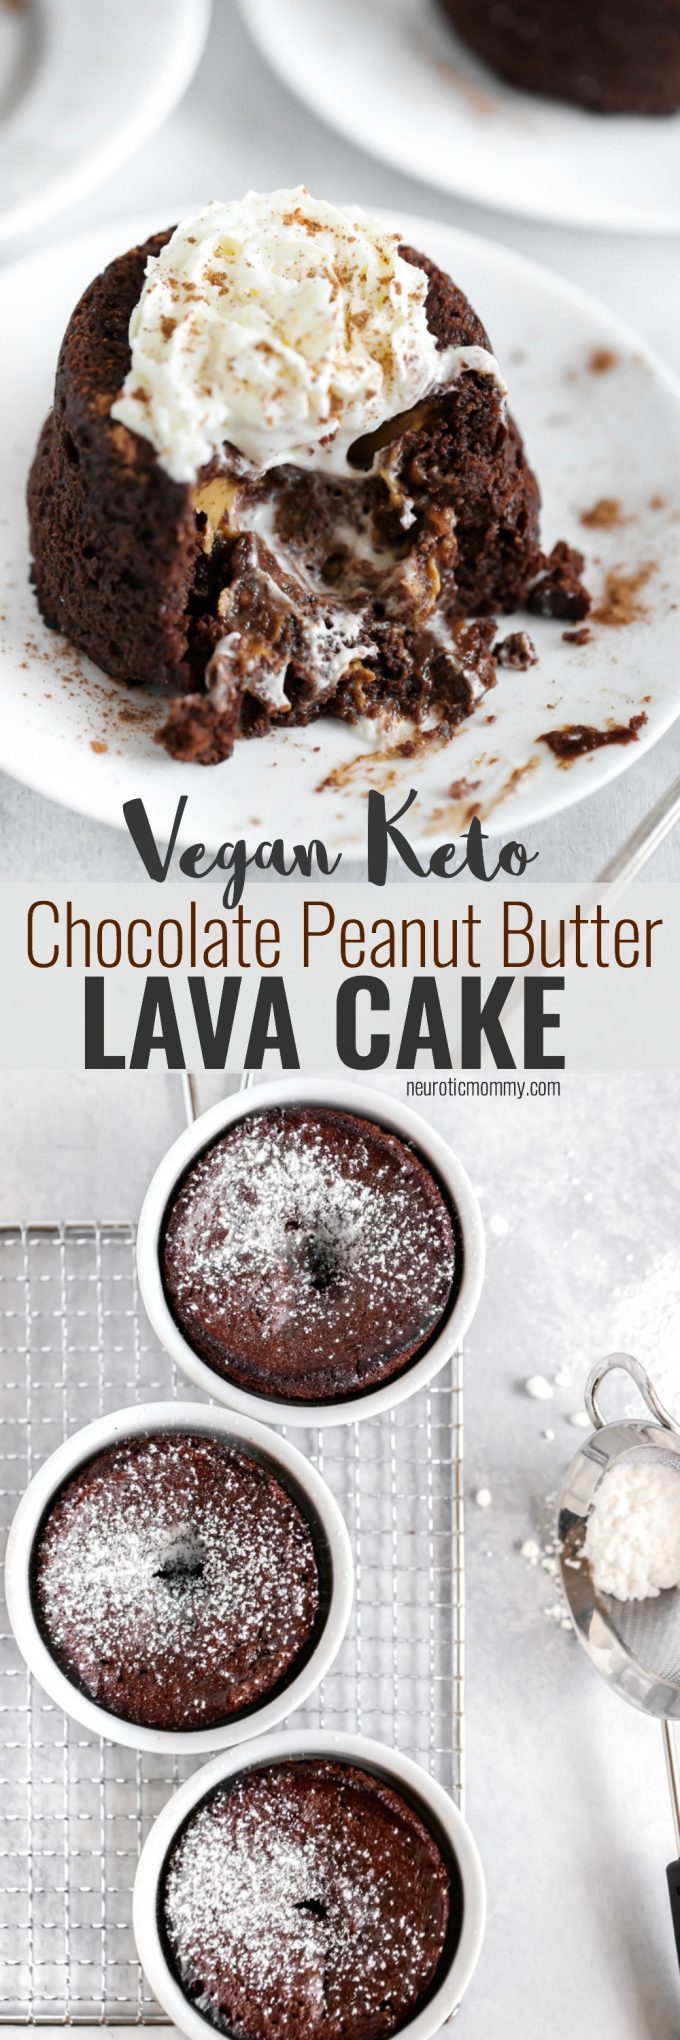 Vegan Keto Chocolate Peanut Butter Lava Cake - NeuroticMommy